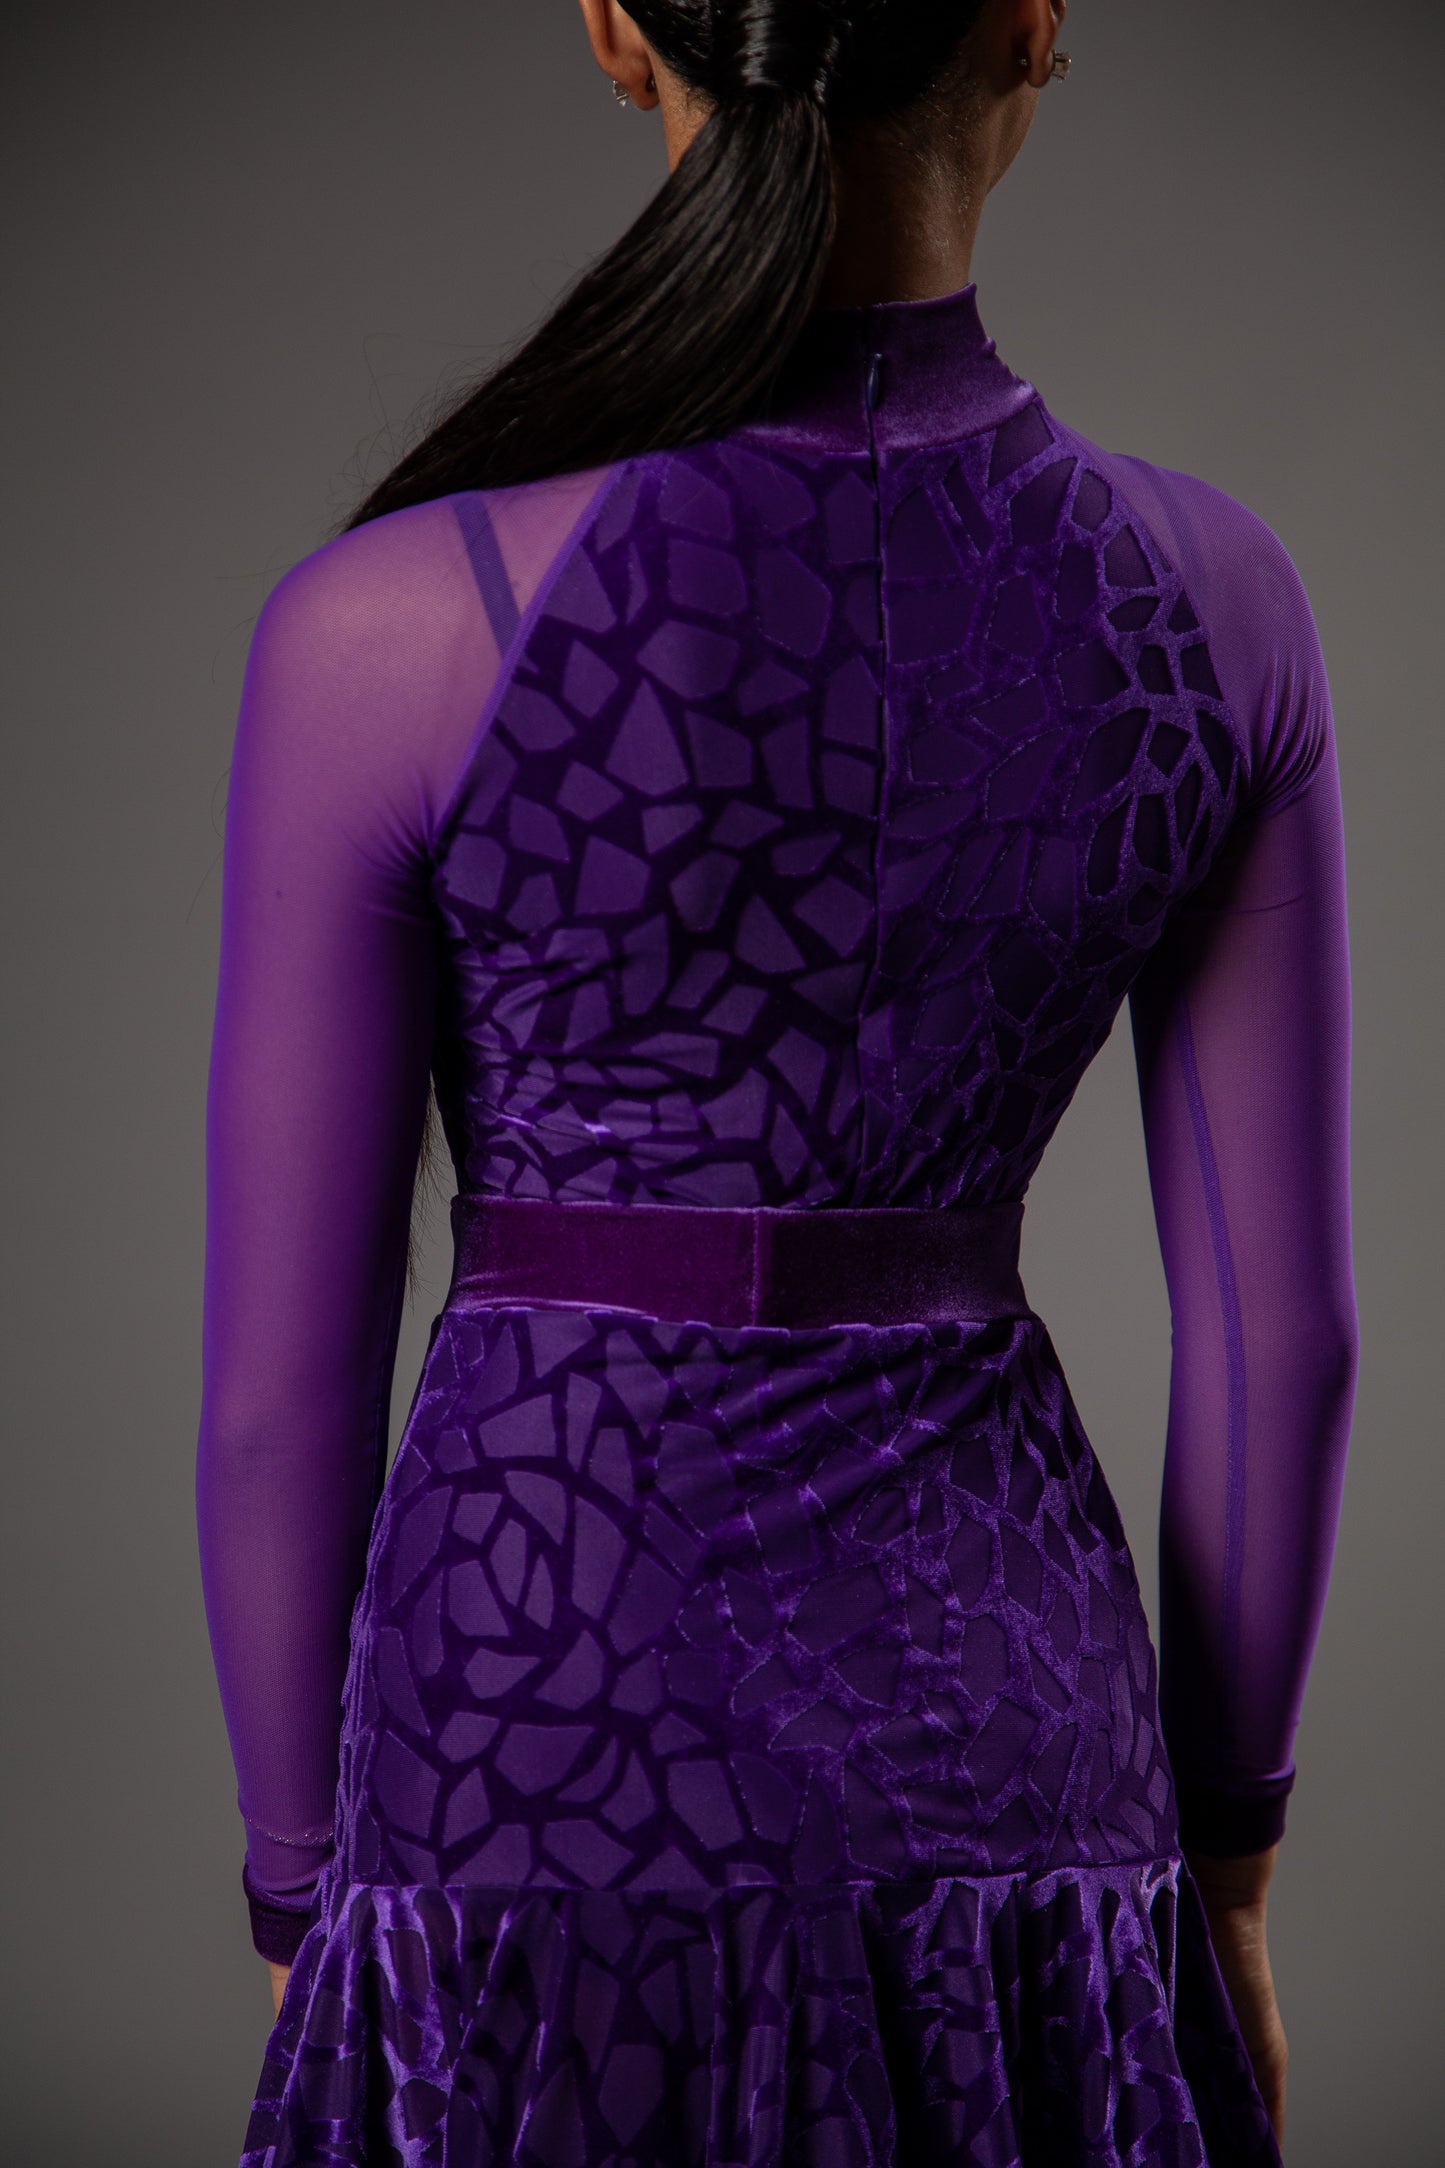 Juvenile dress Amber in purple color